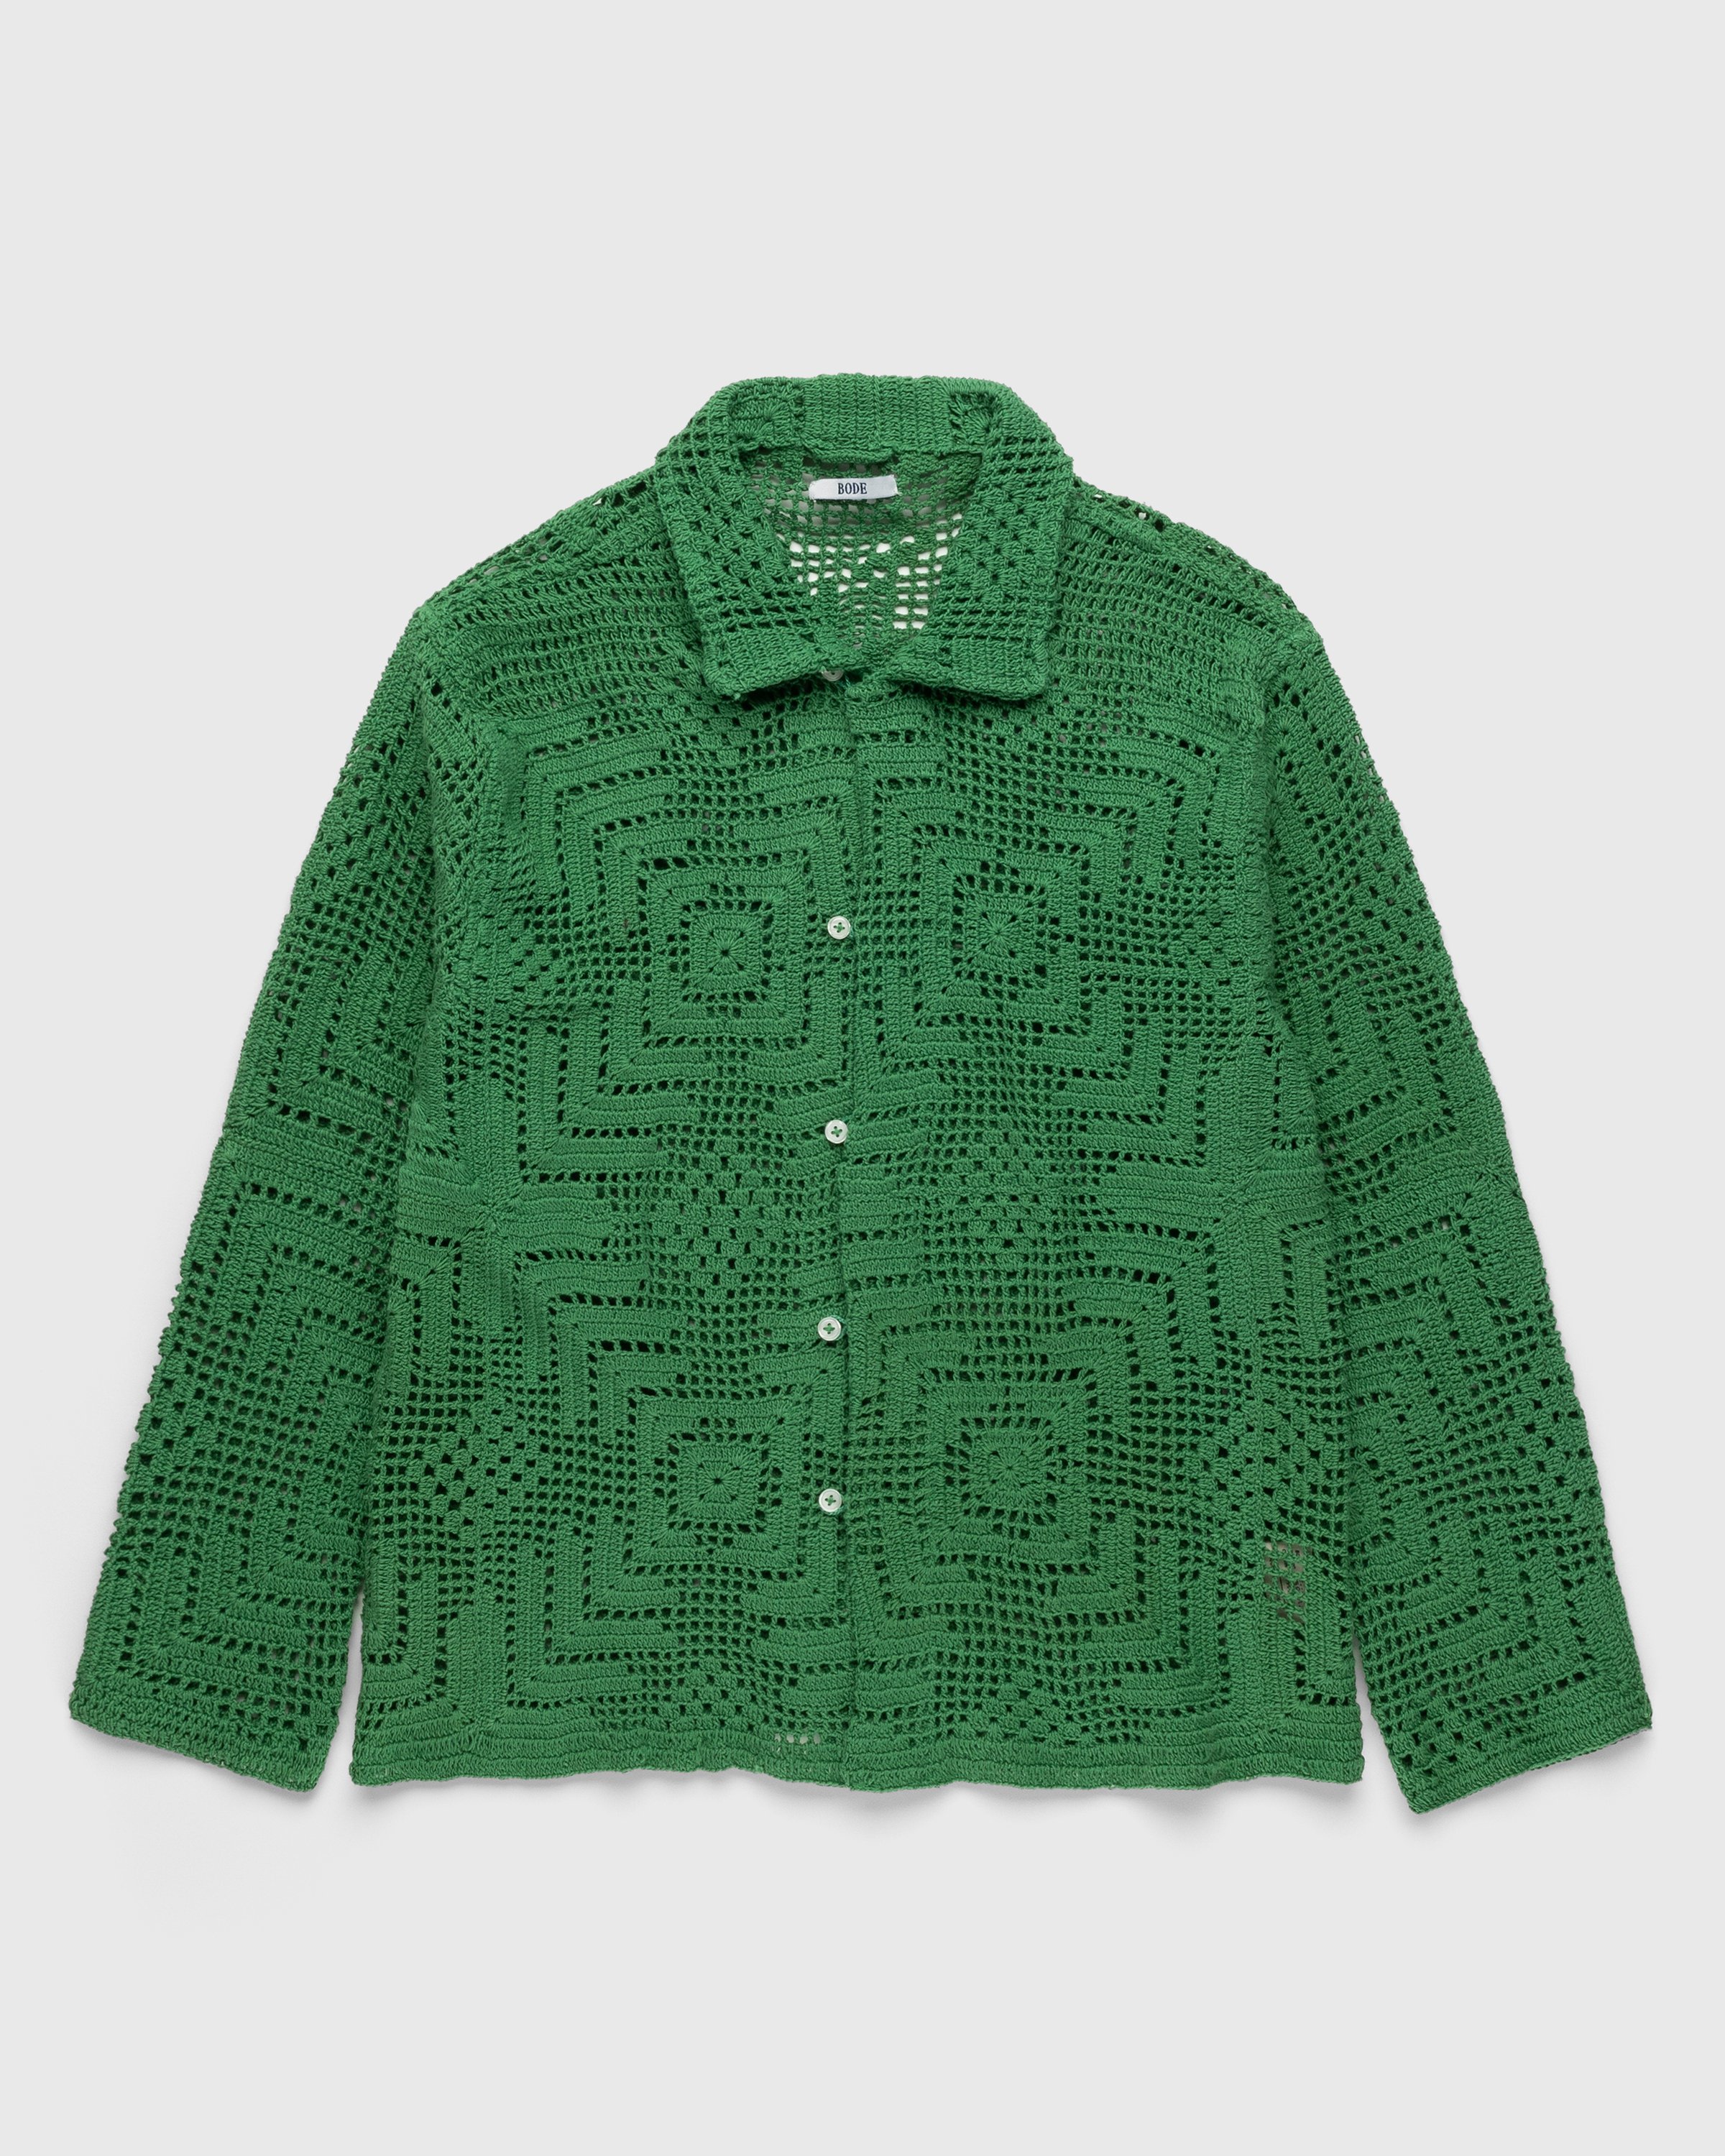 Bode - Crochet Overshirt Green - Clothing - Green - Image 1